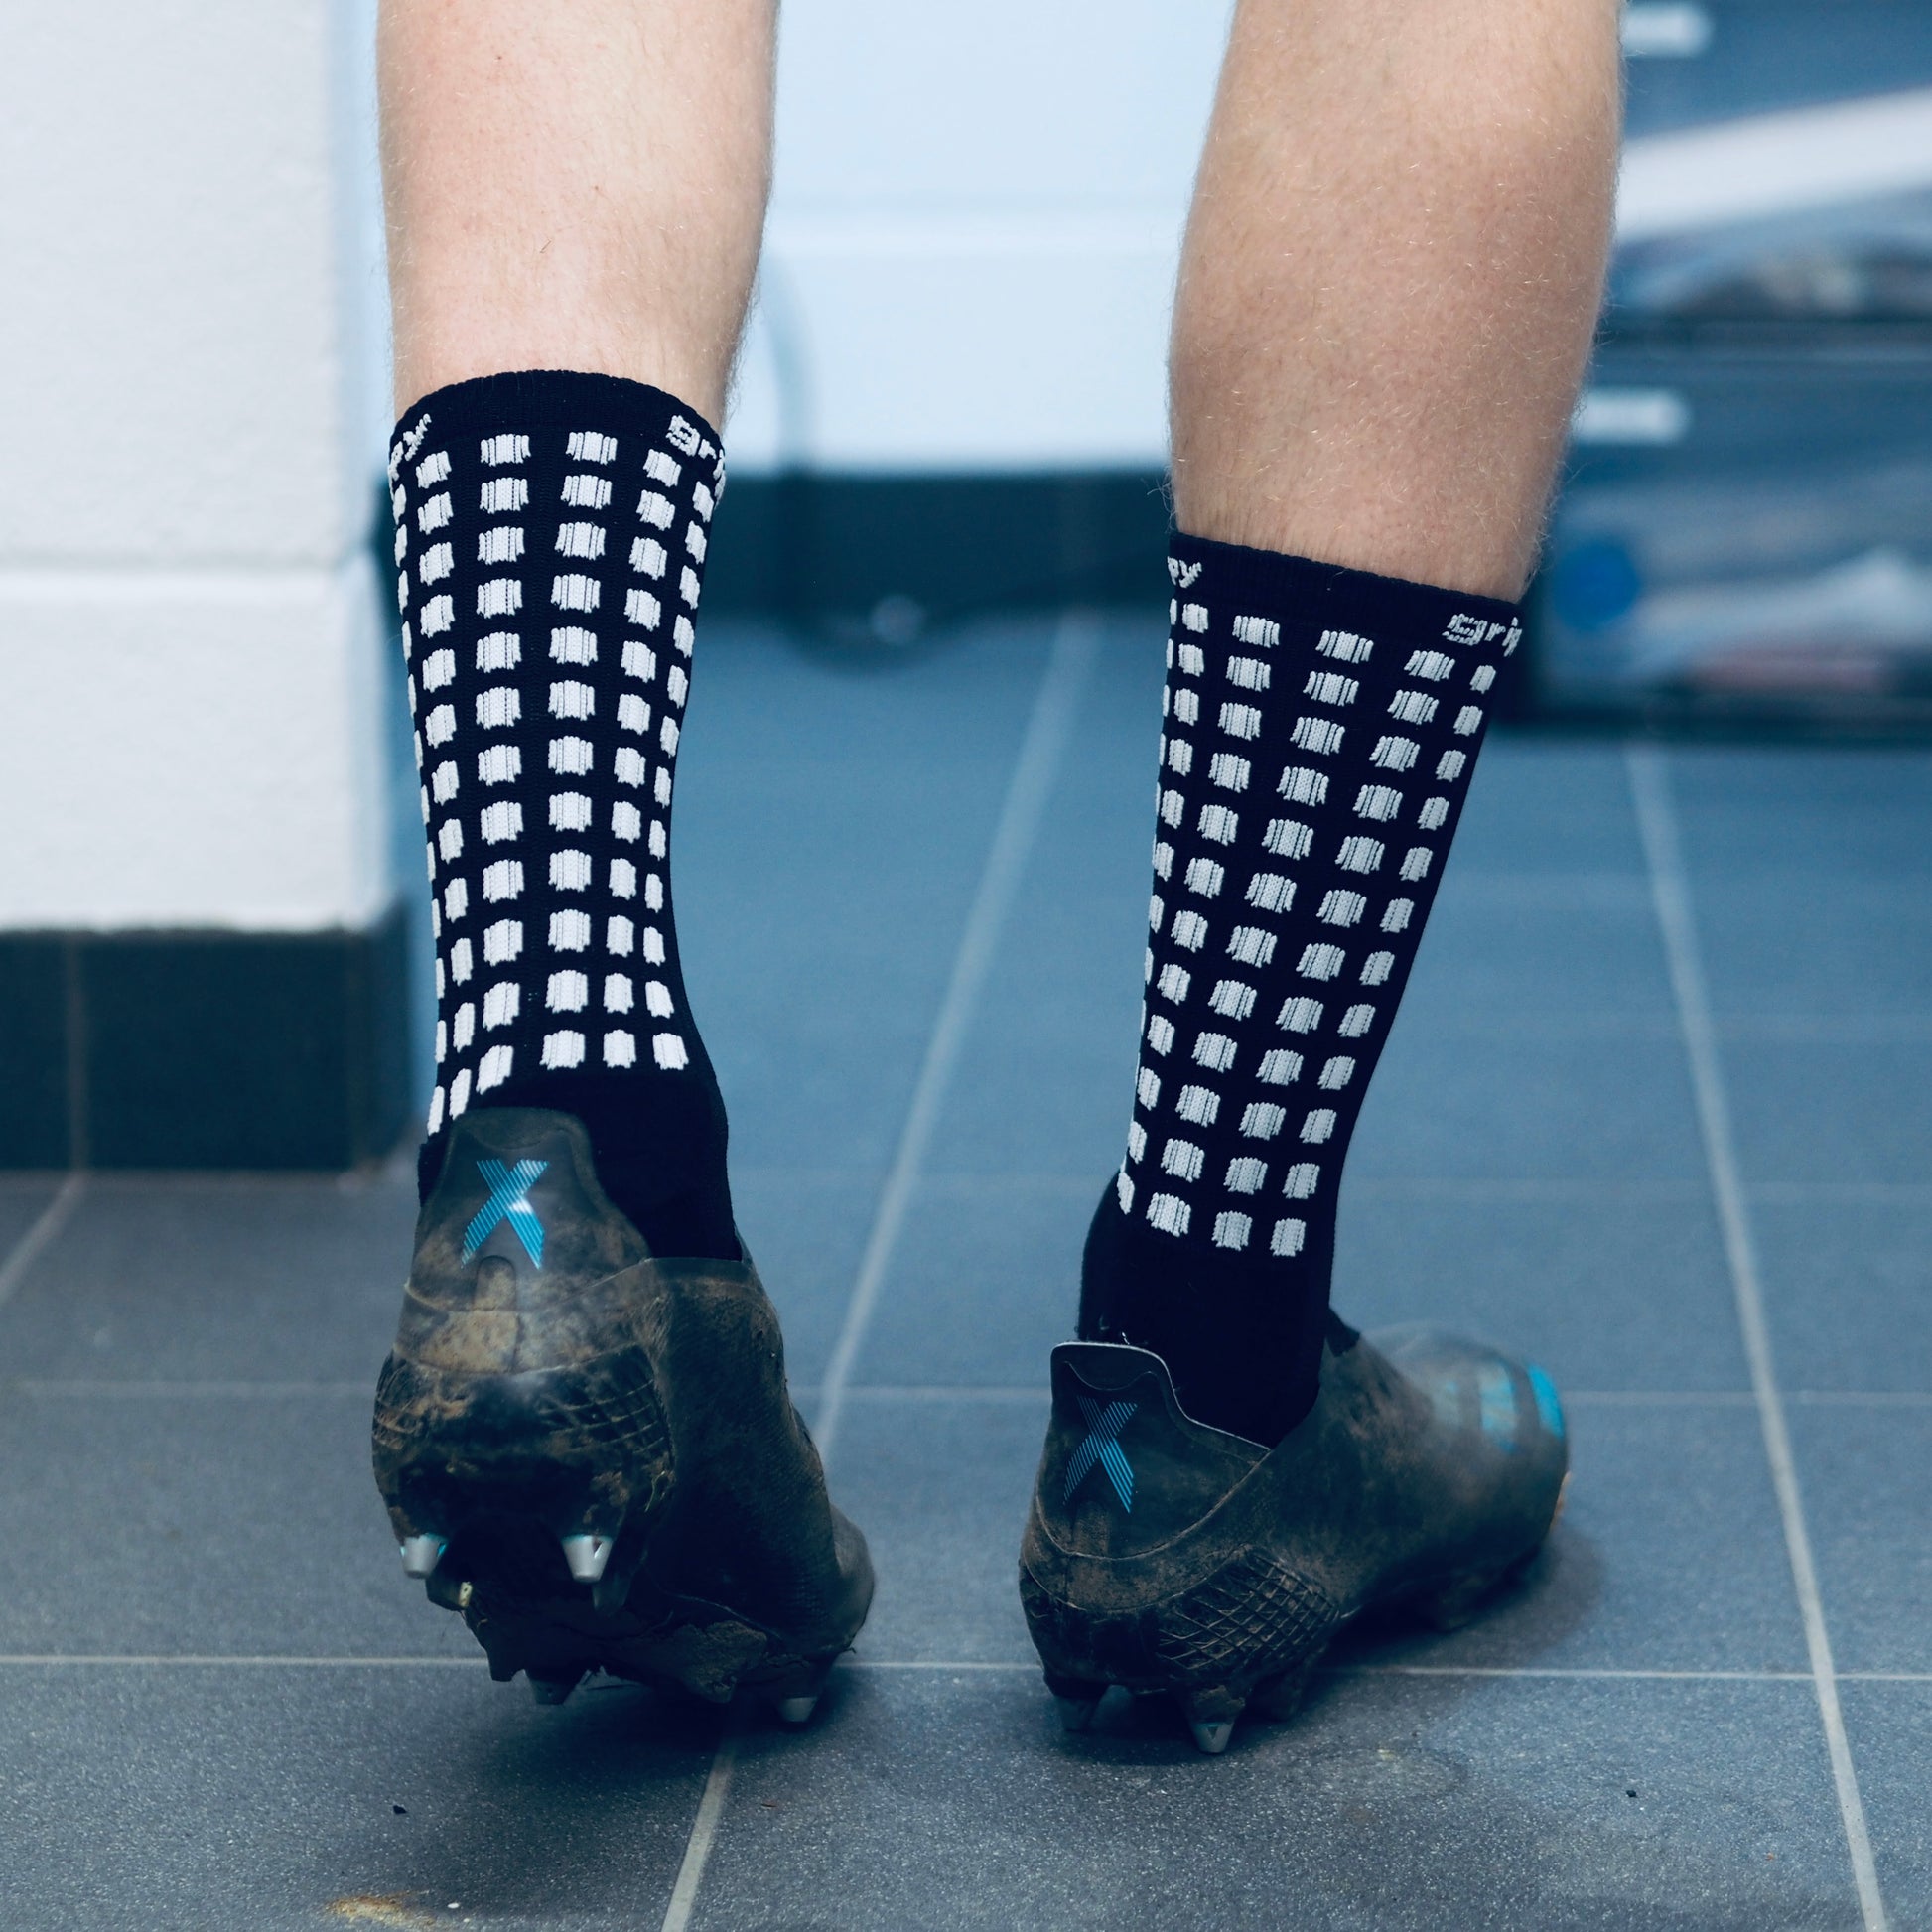 Best 11 Grip Socks For Football Boots